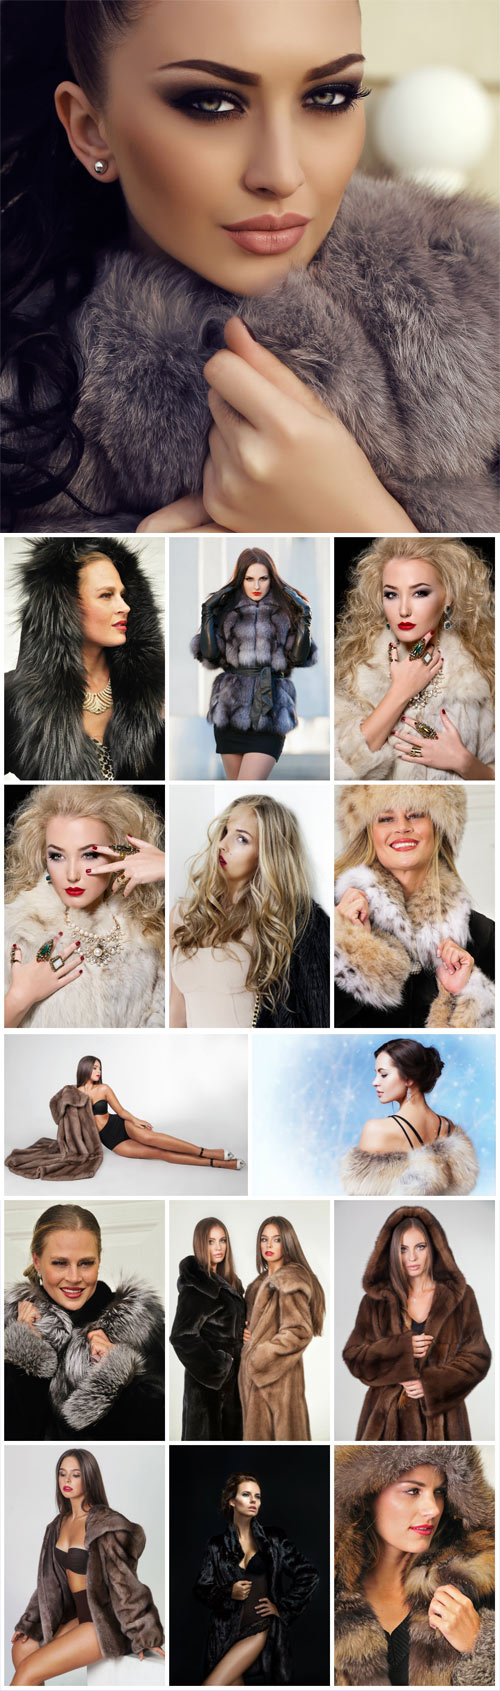 Women in luxurious furs - Stock photo